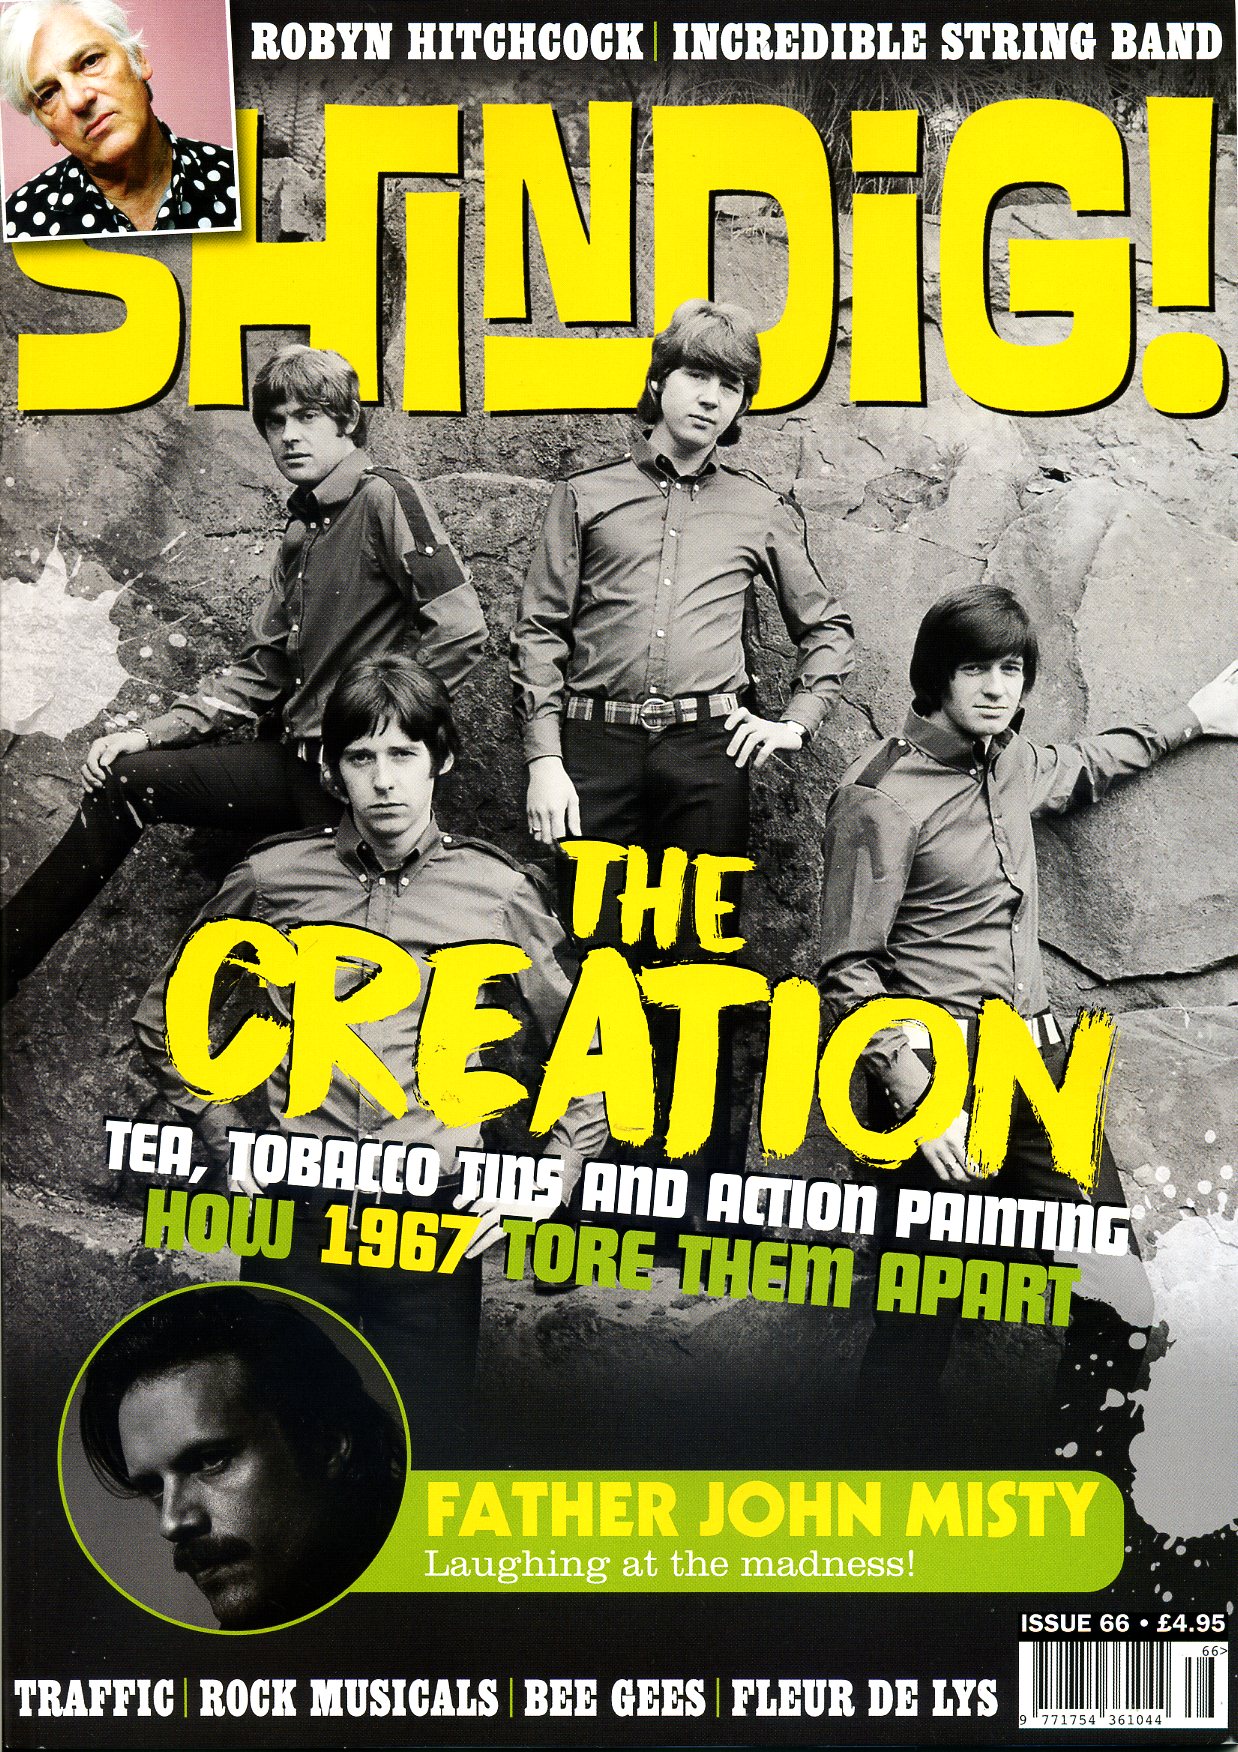 SHINDIG! Issue 66  (ab: 8.April)